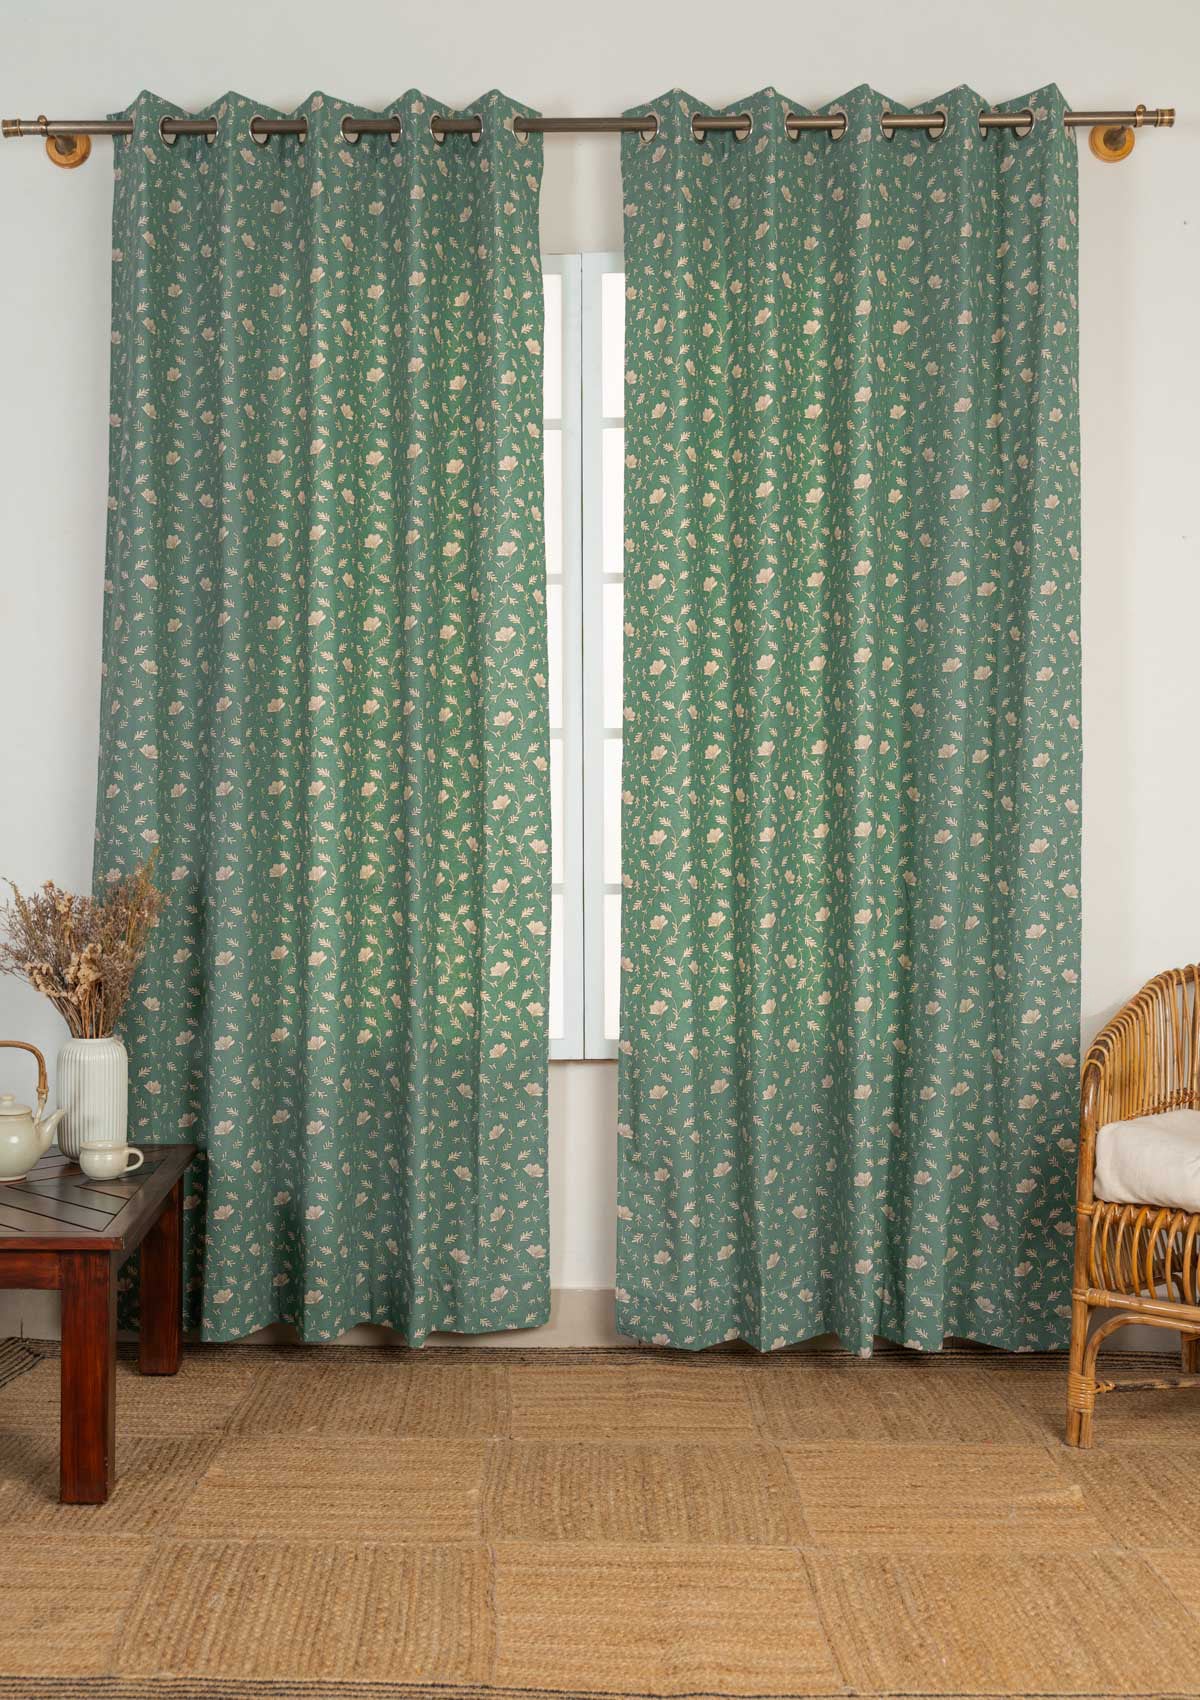 Eden aqua blue 100% cotton floral curtain for bed room - Room darkening - Single - Pack of 1